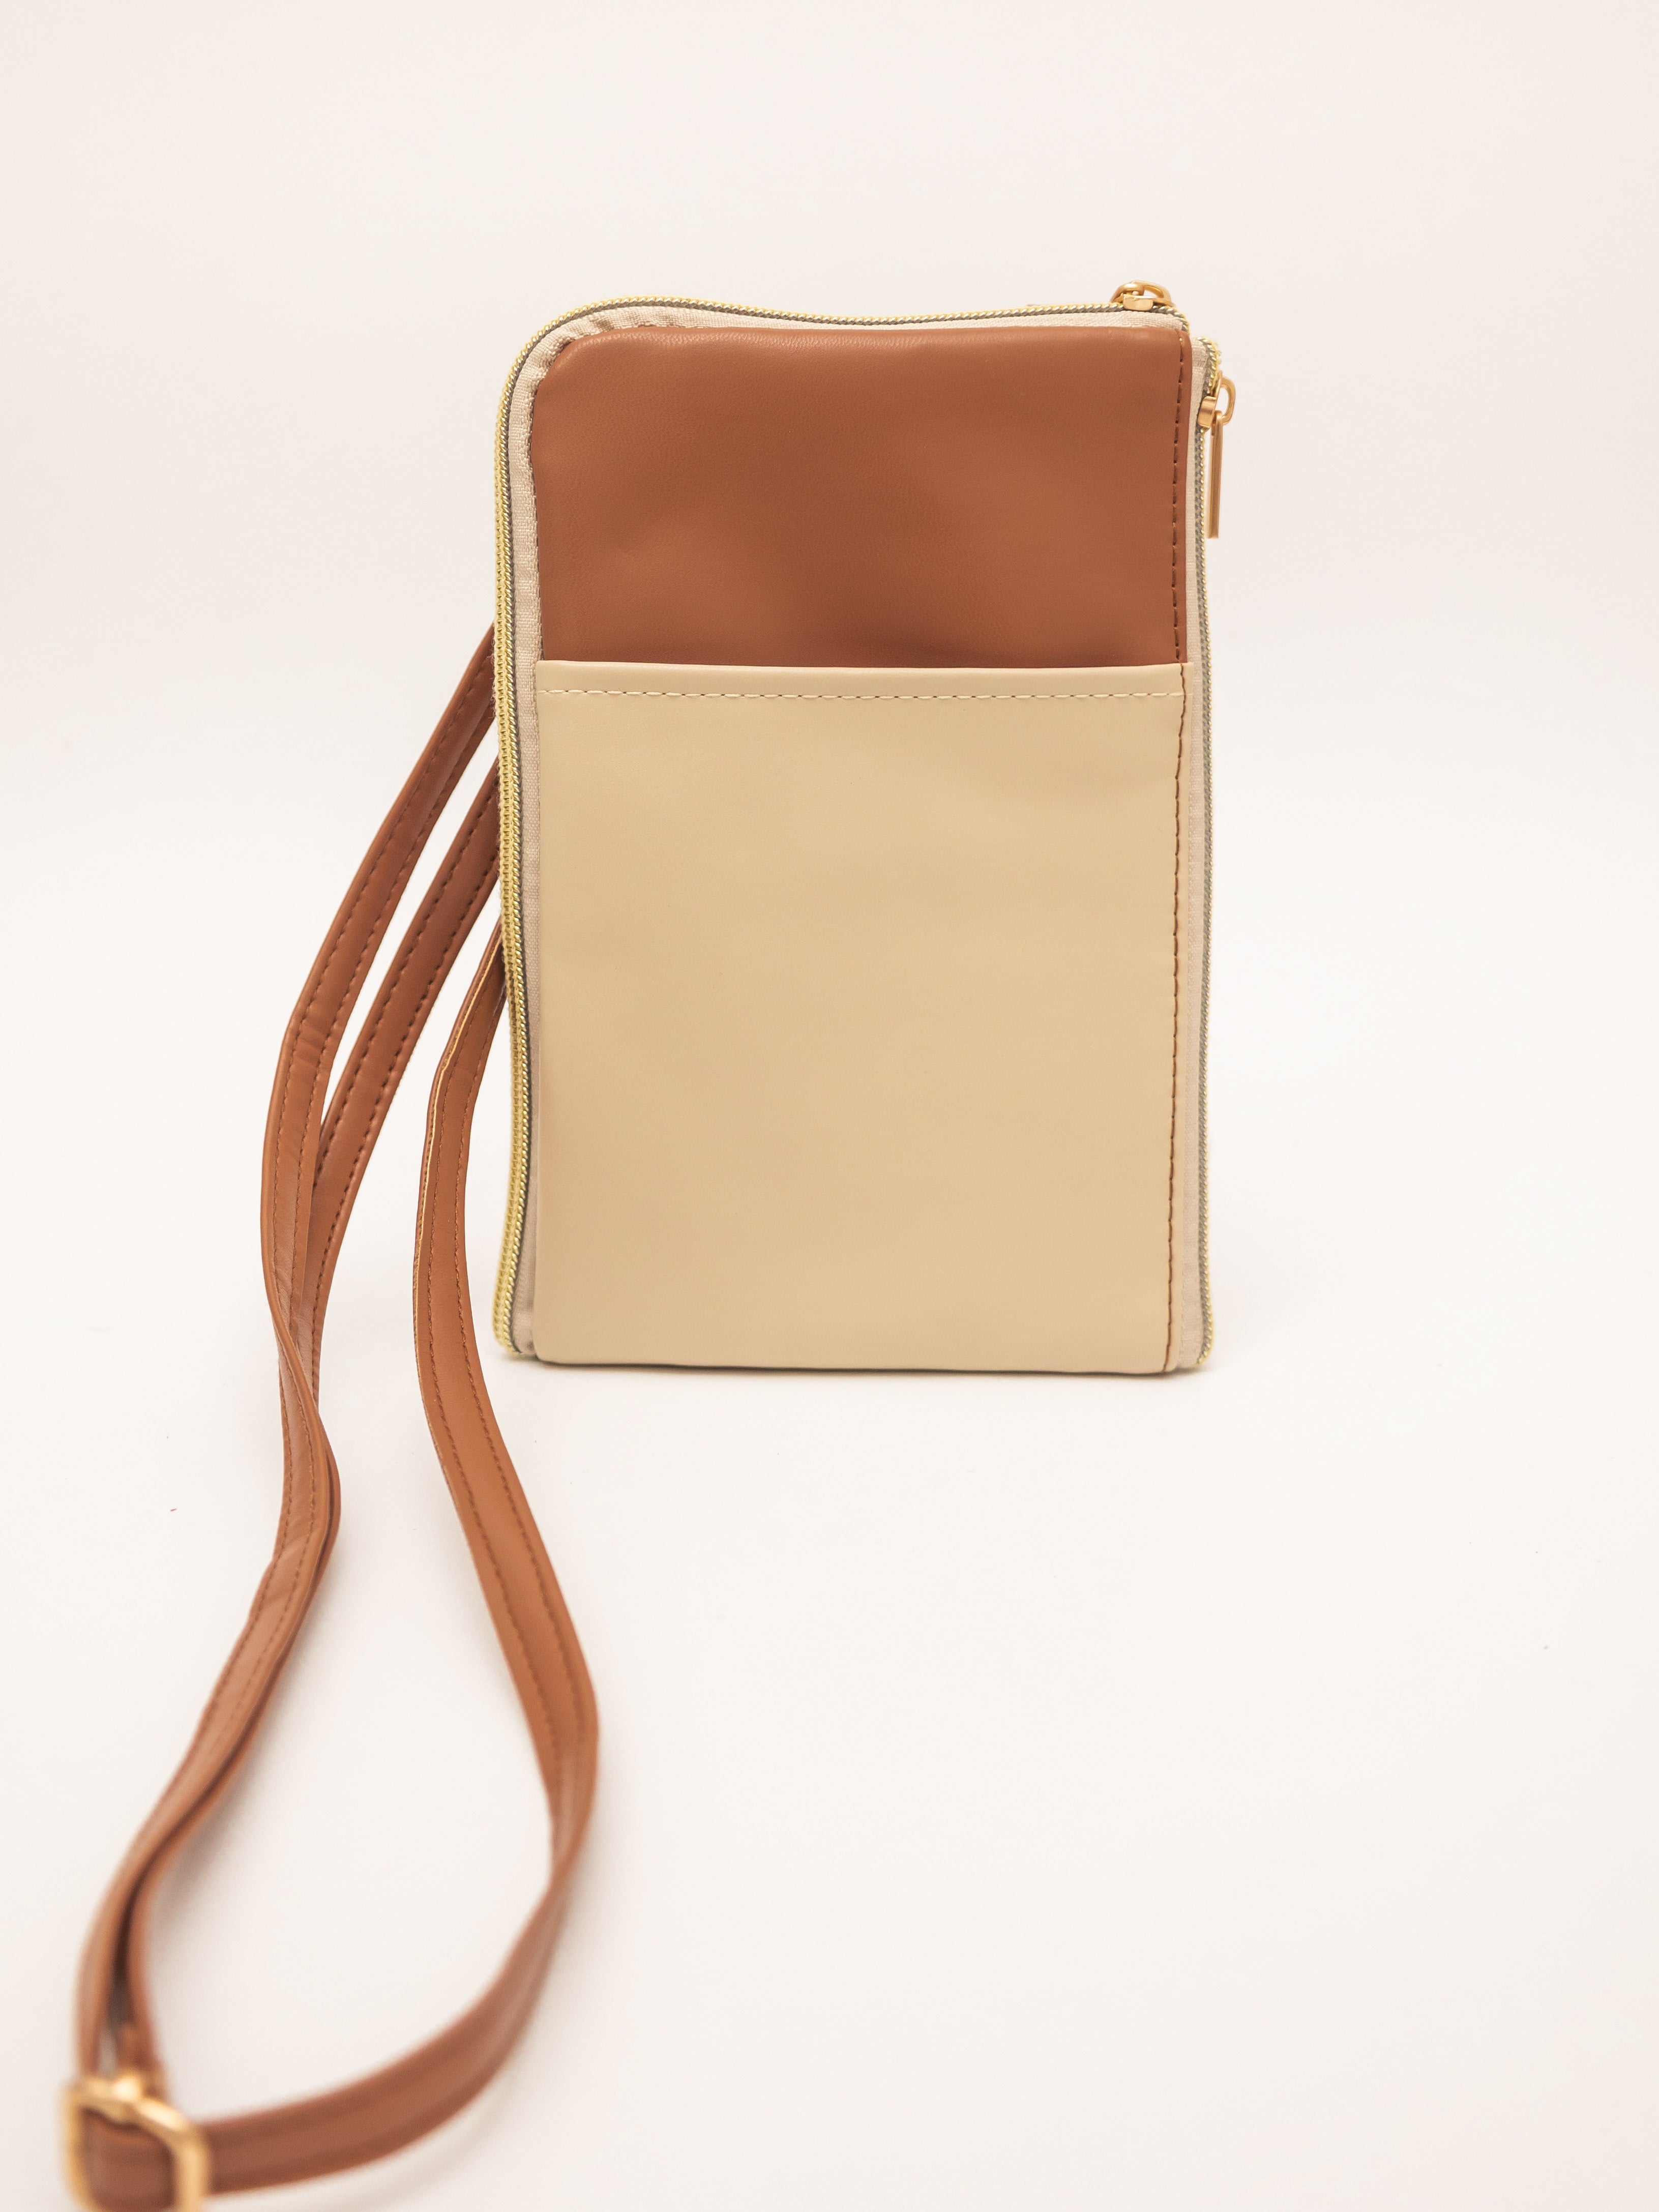 Nude Camel Leather Dual Zip Sling Bag 2.0